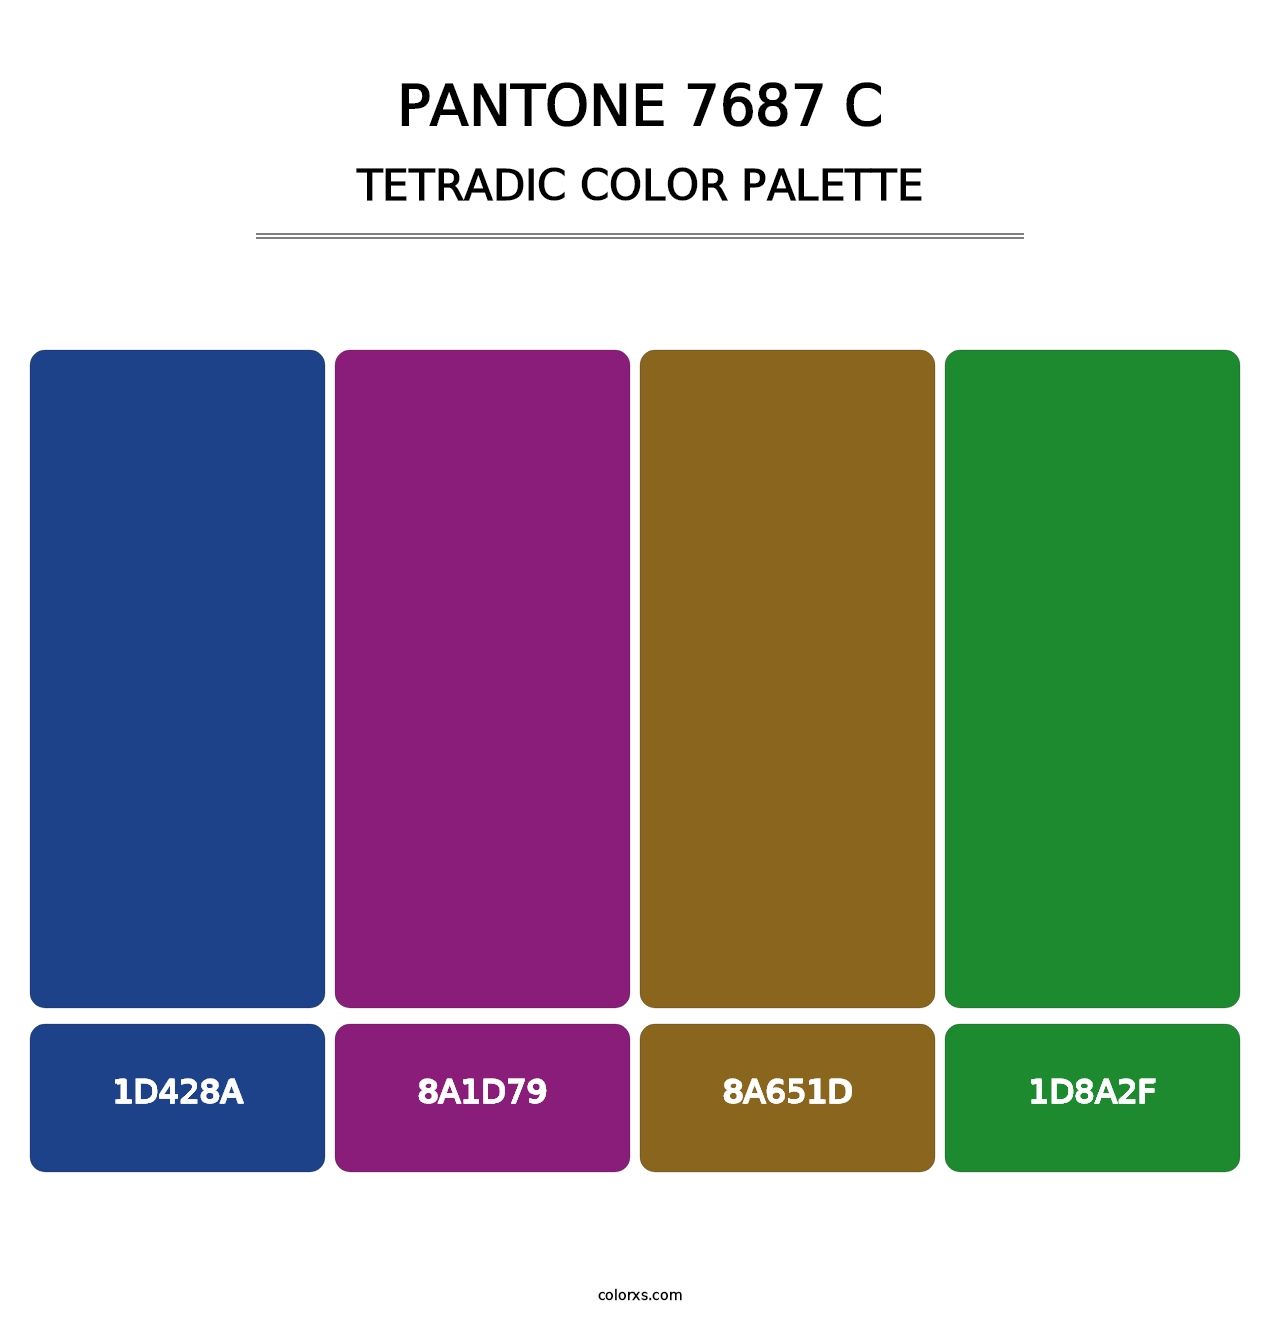 PANTONE 7687 C - Tetradic Color Palette